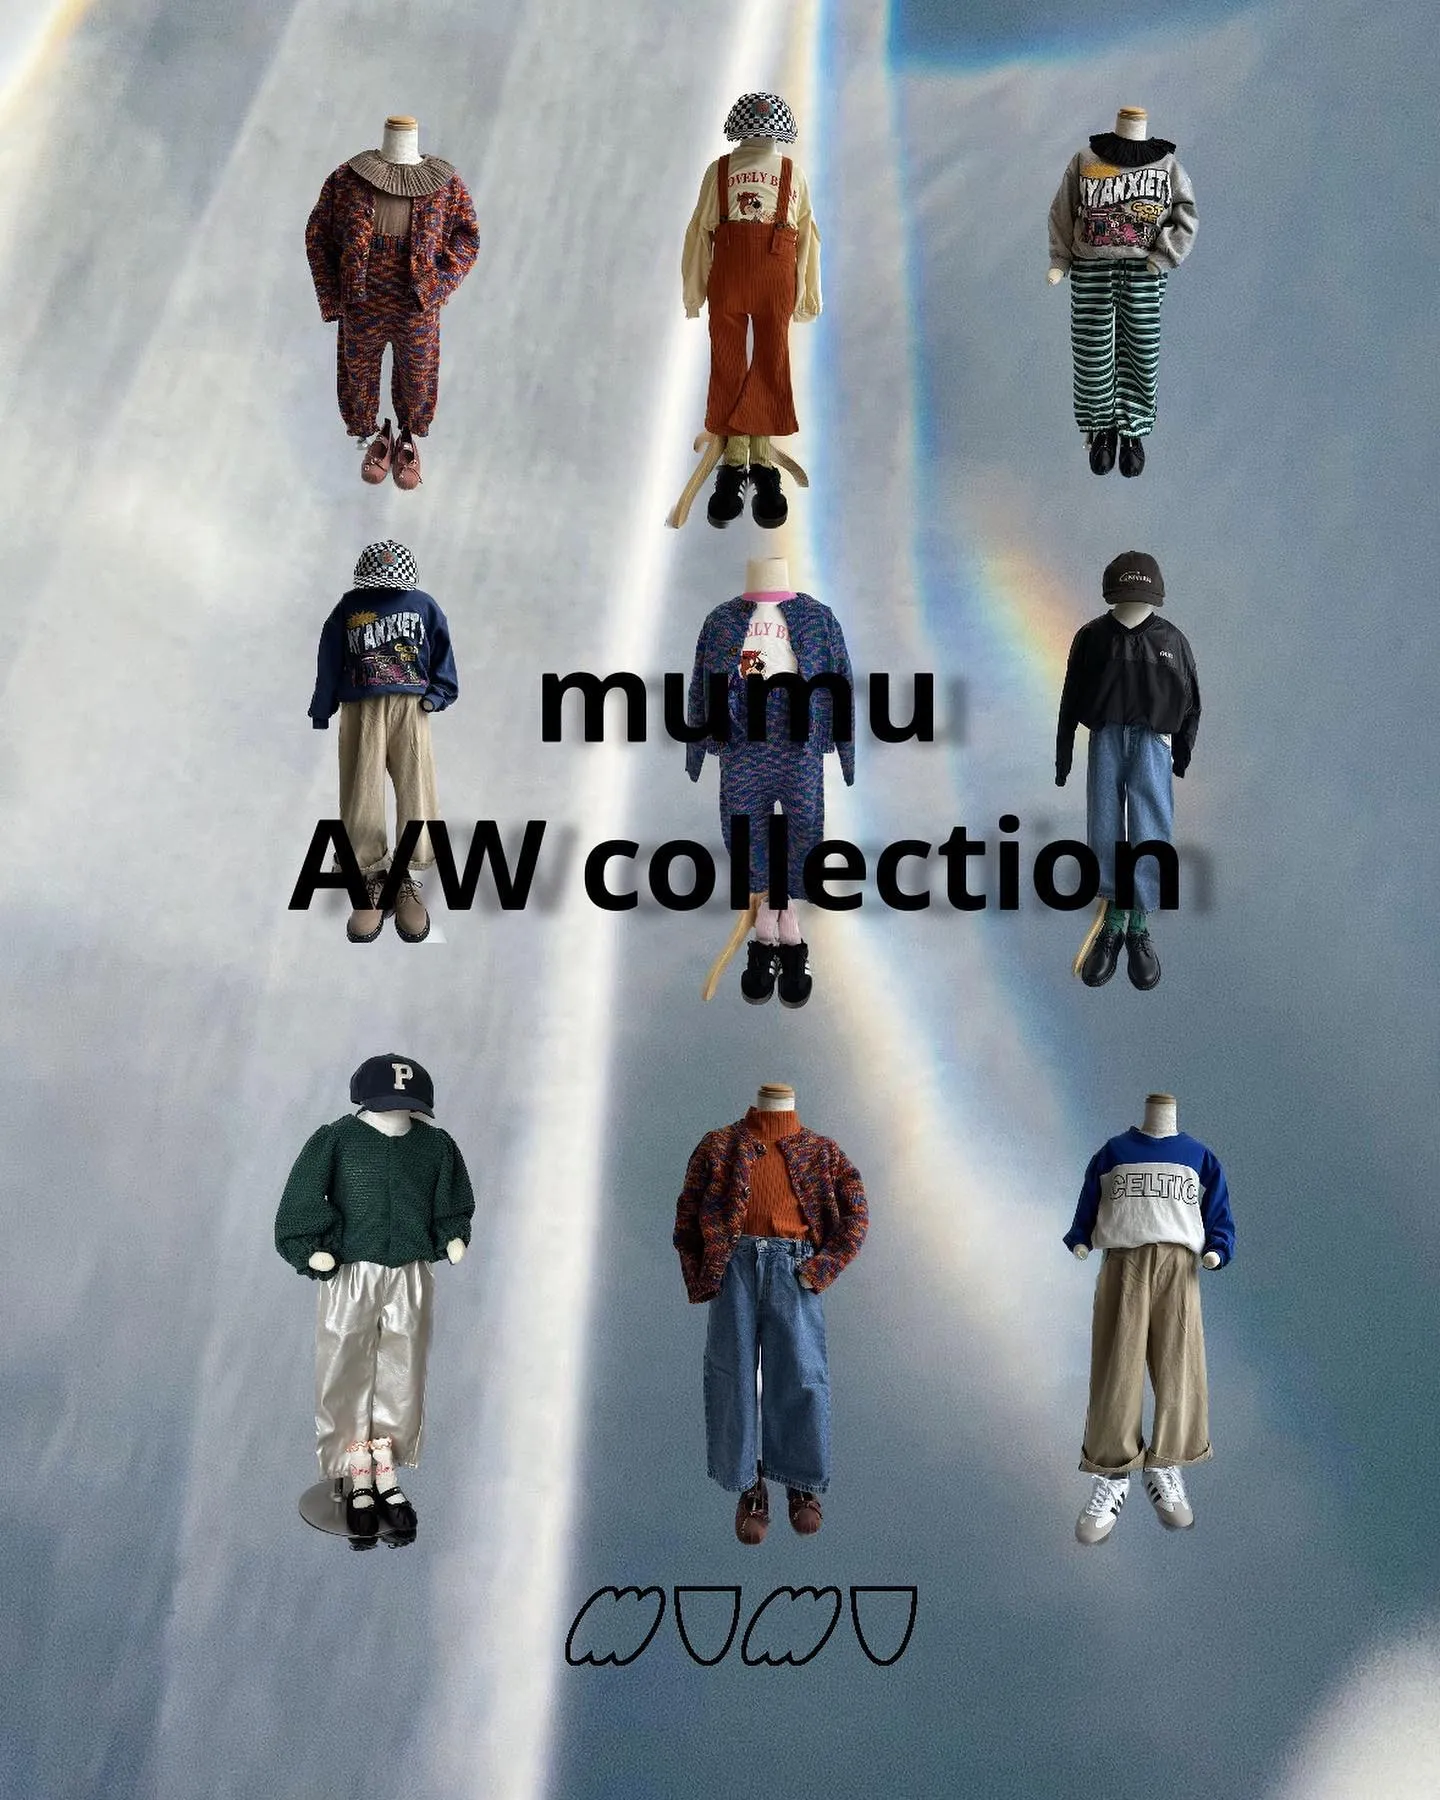 mumu A/Wcollection